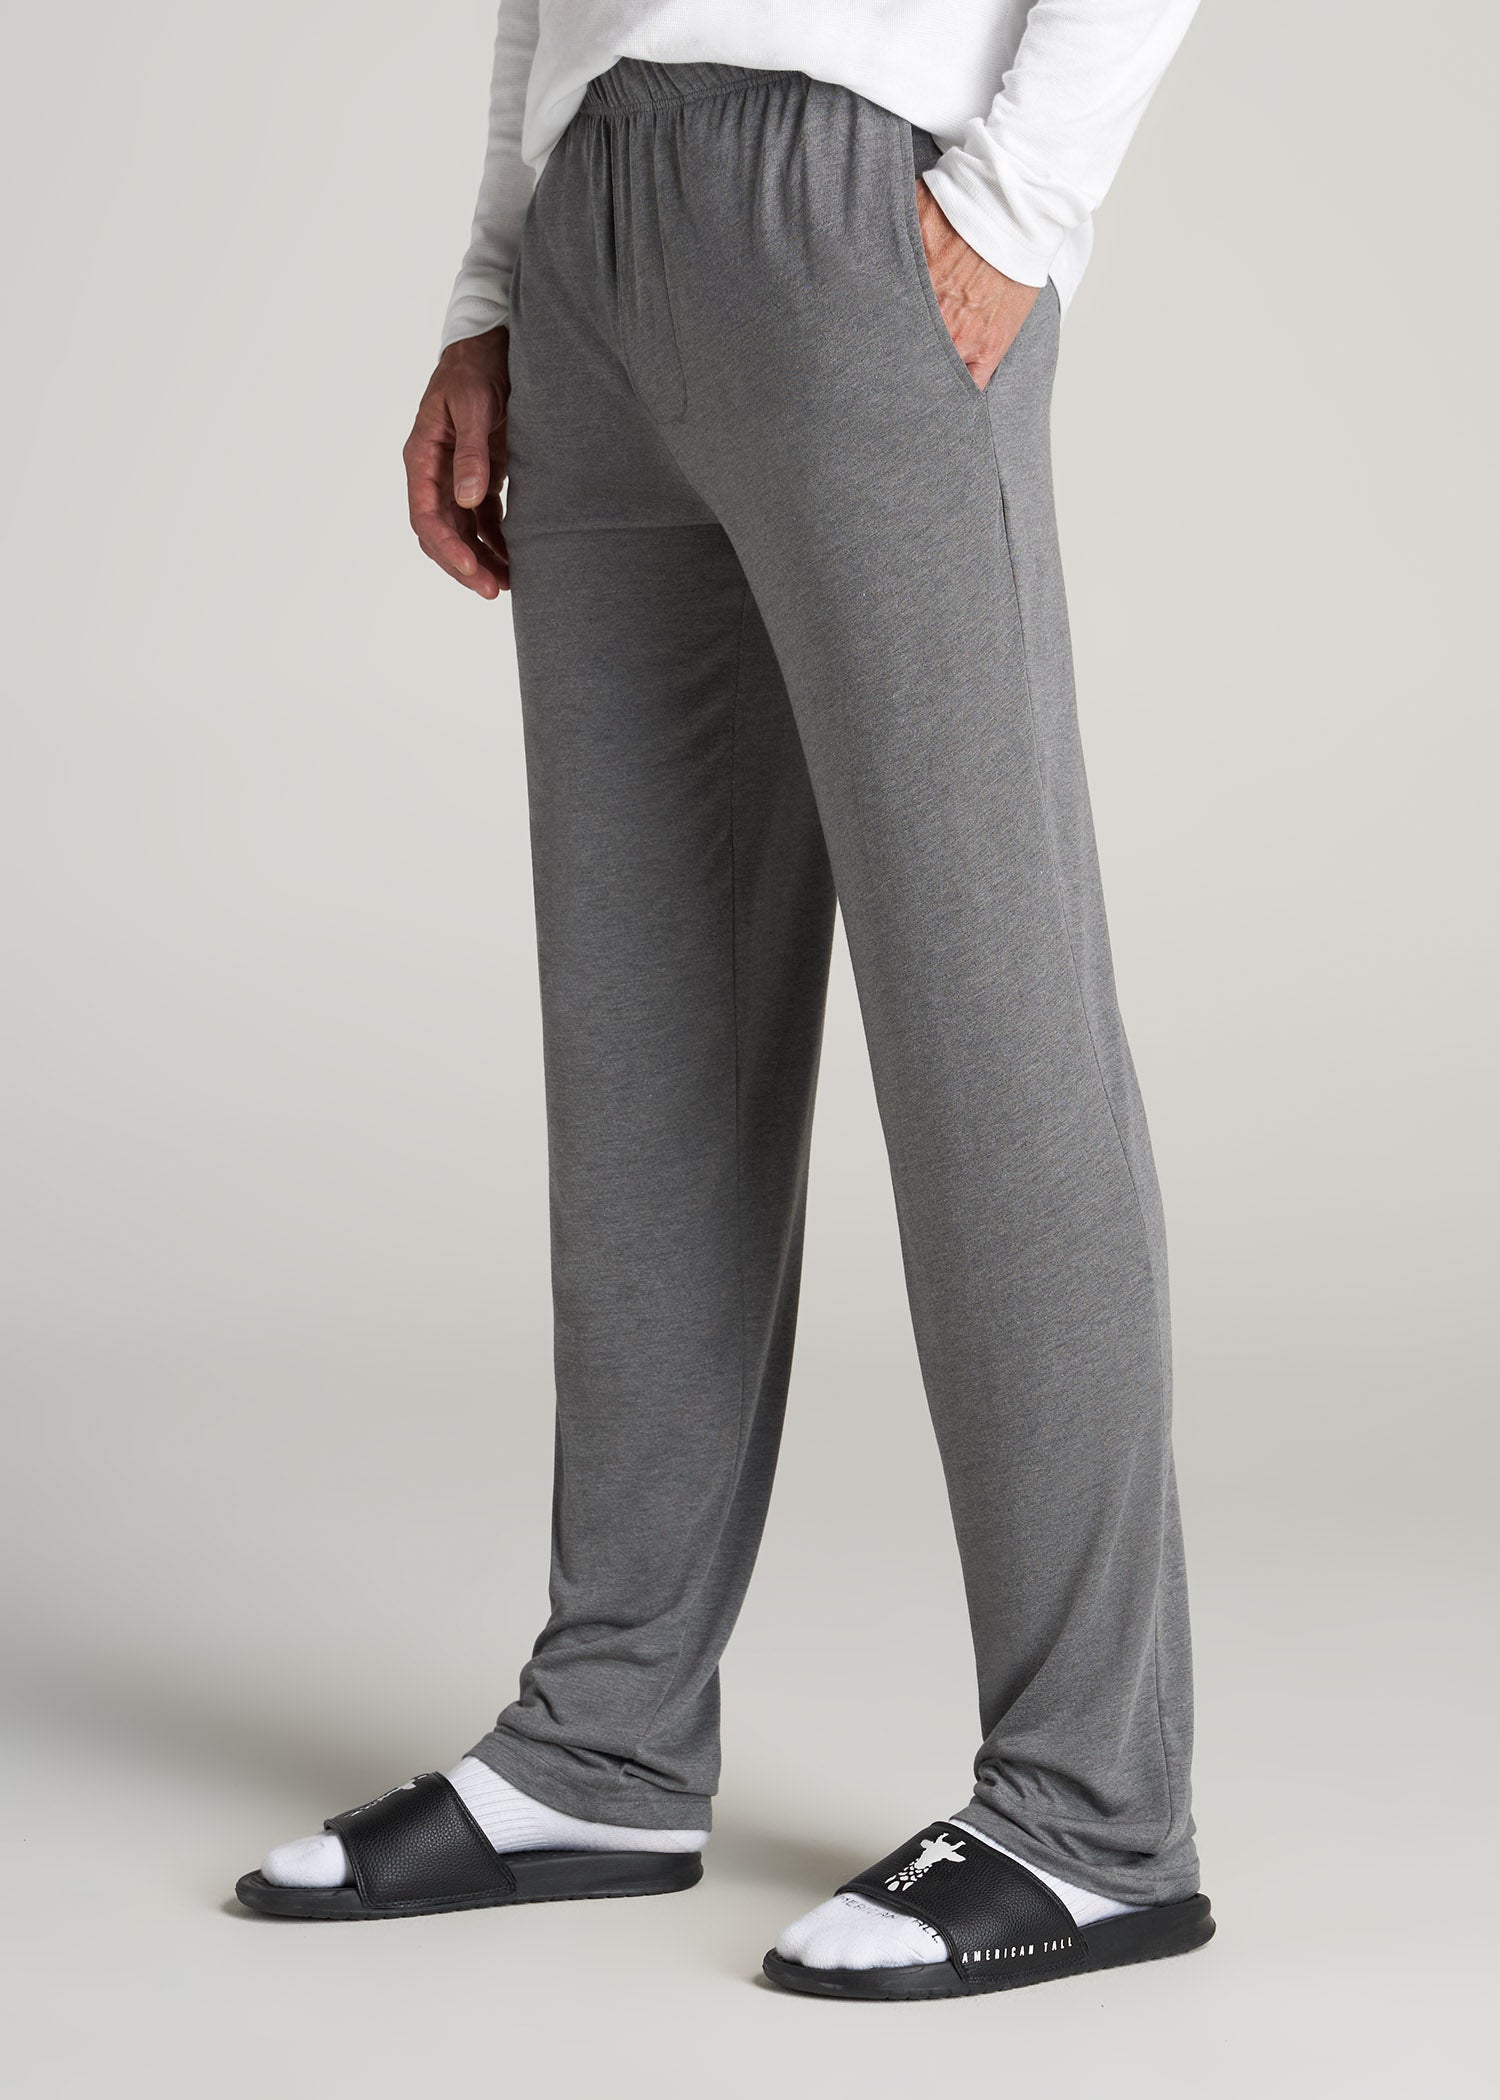 DG Hill Mens Sleep Pants, Fleece Pajama Bottoms with Pockets, 3 Pairs -  Walmart.com